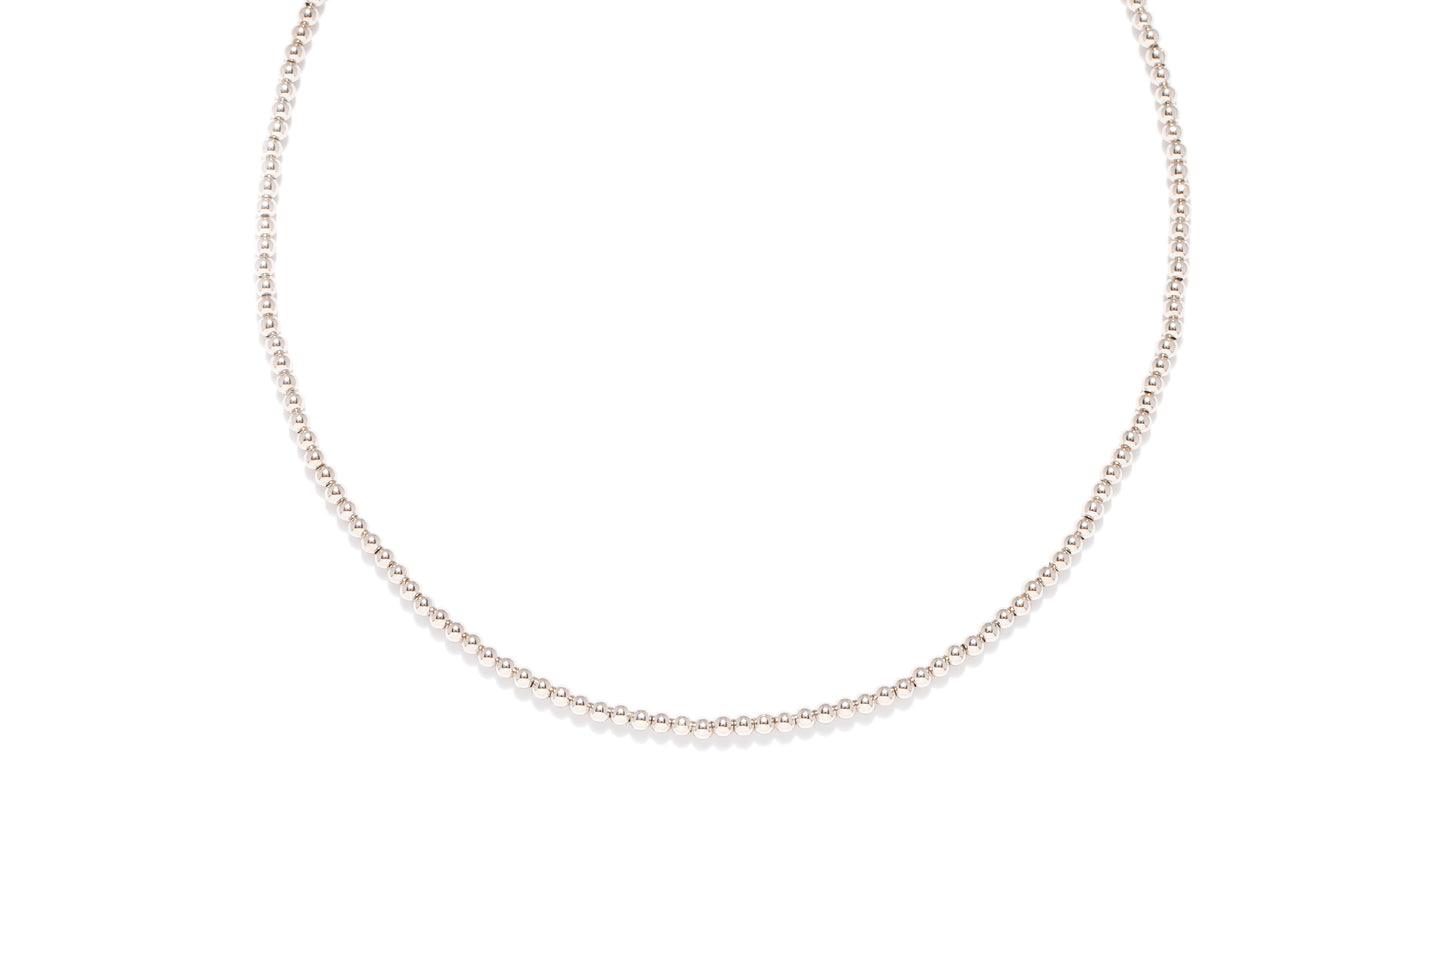 Hera necklace